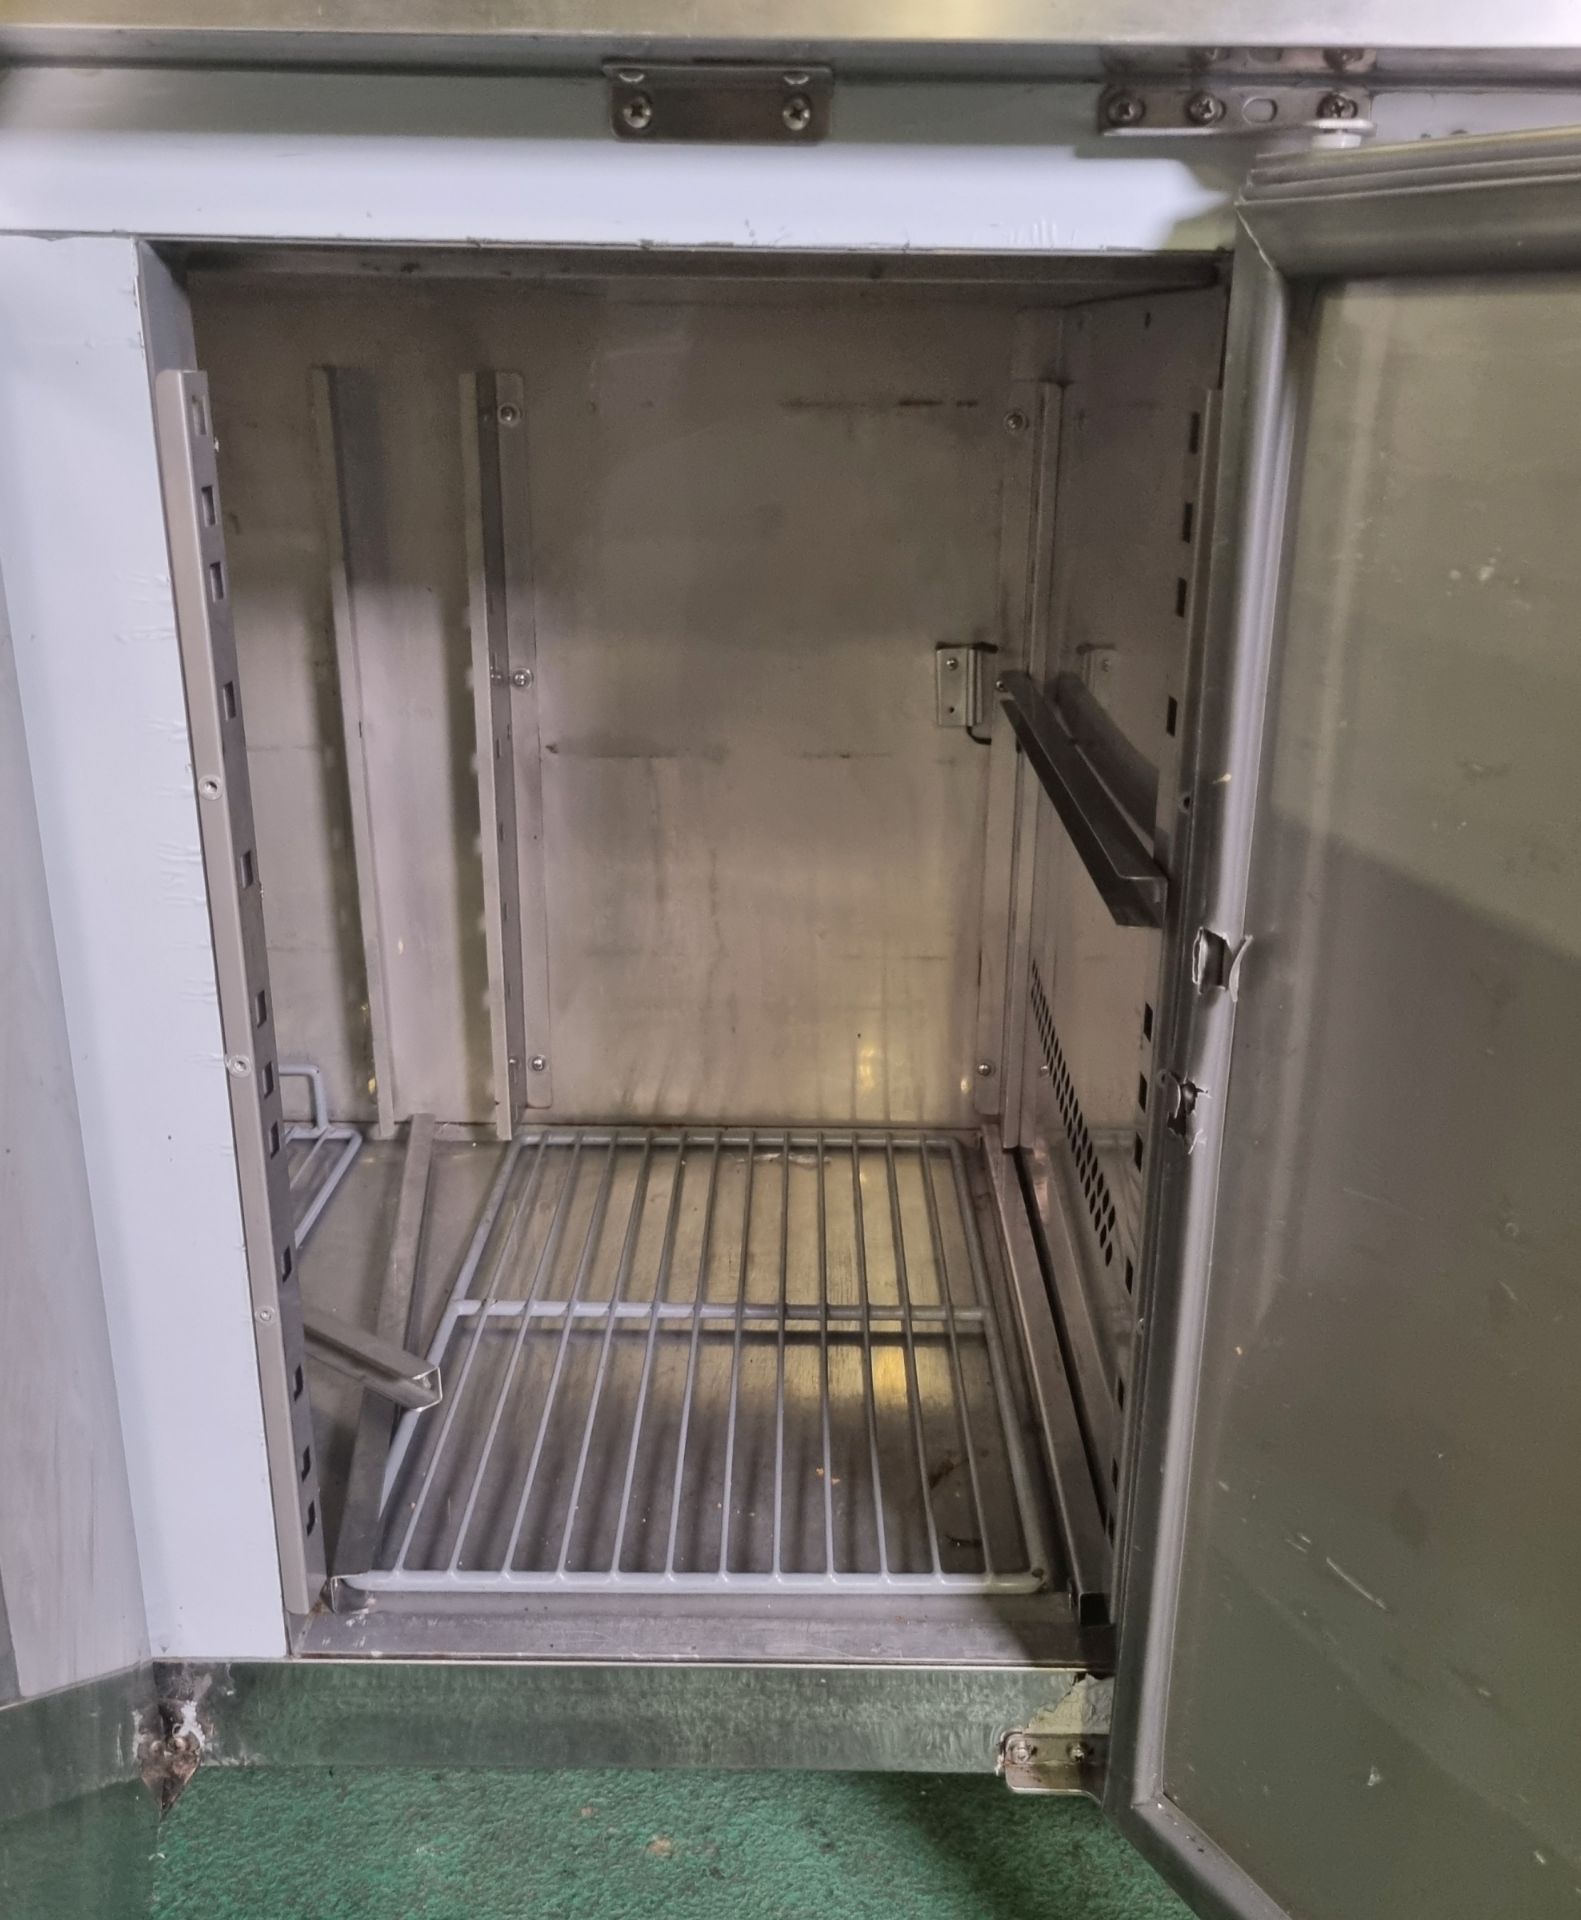 Prodis GN3100TN stainless steel 3 door counter fridge - W 1800 x D 700 x H 830mm - Image 5 of 6